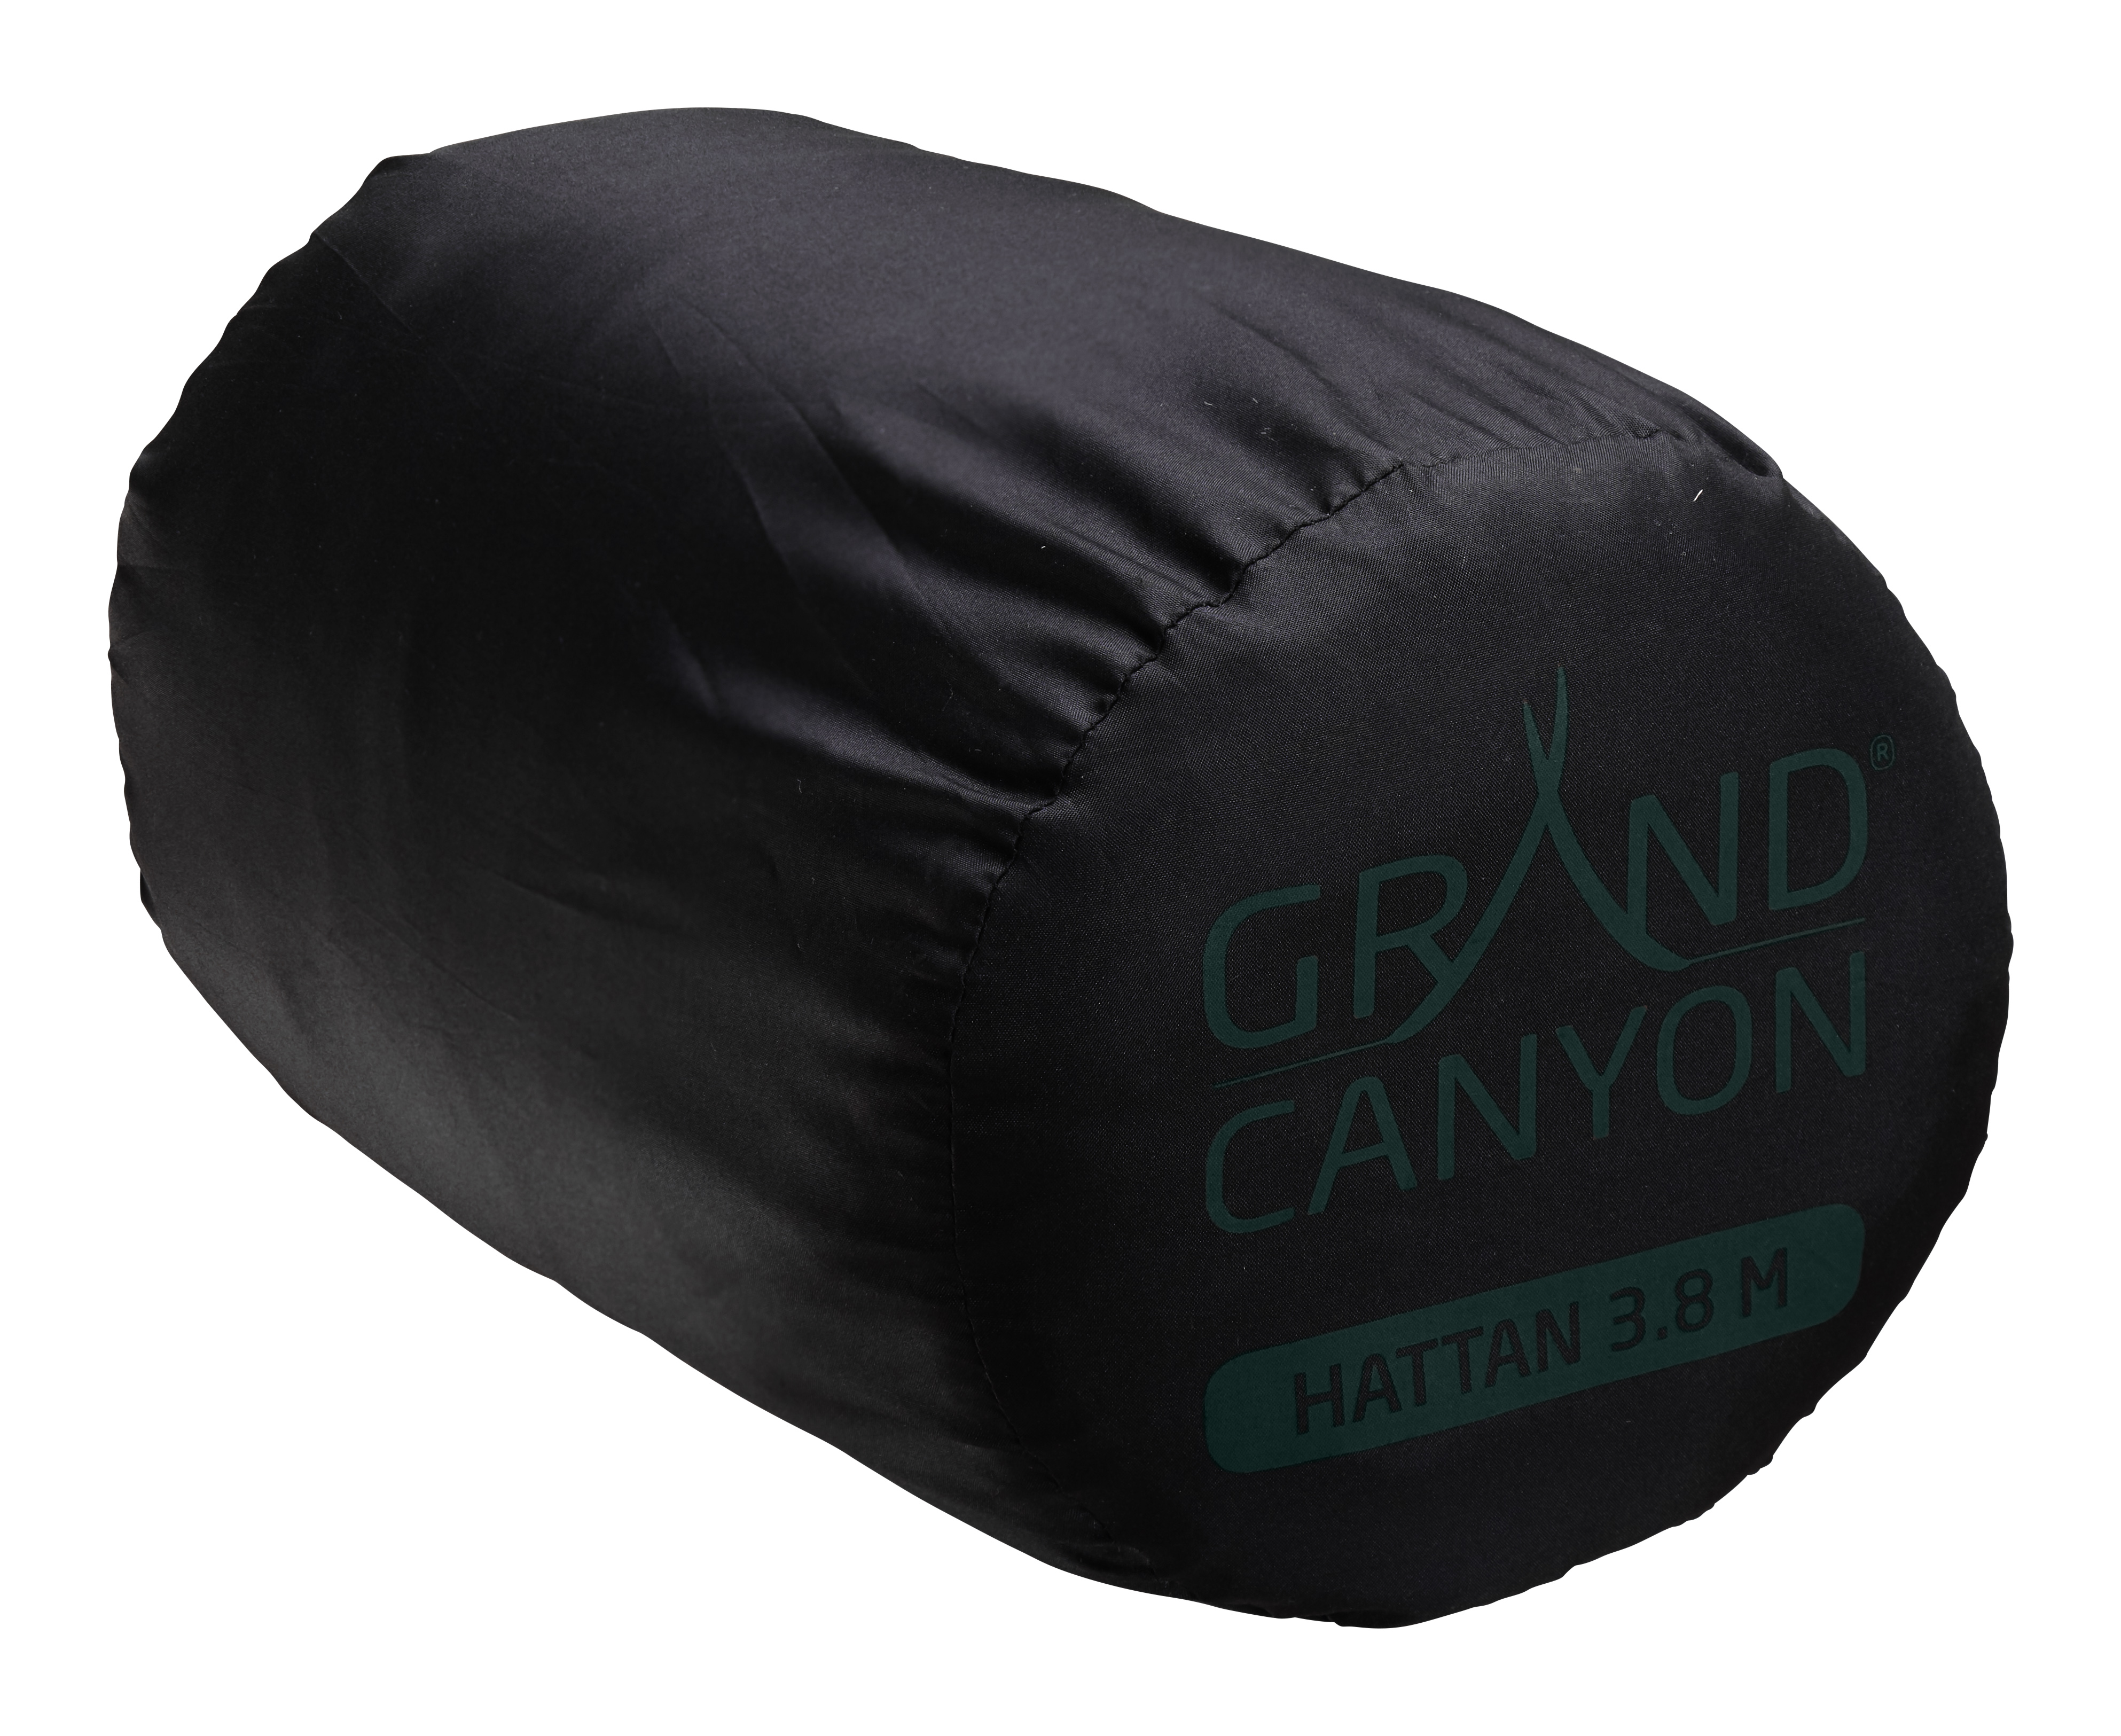 Grand Canyon "Hattan 3.8 M" - botanical garden